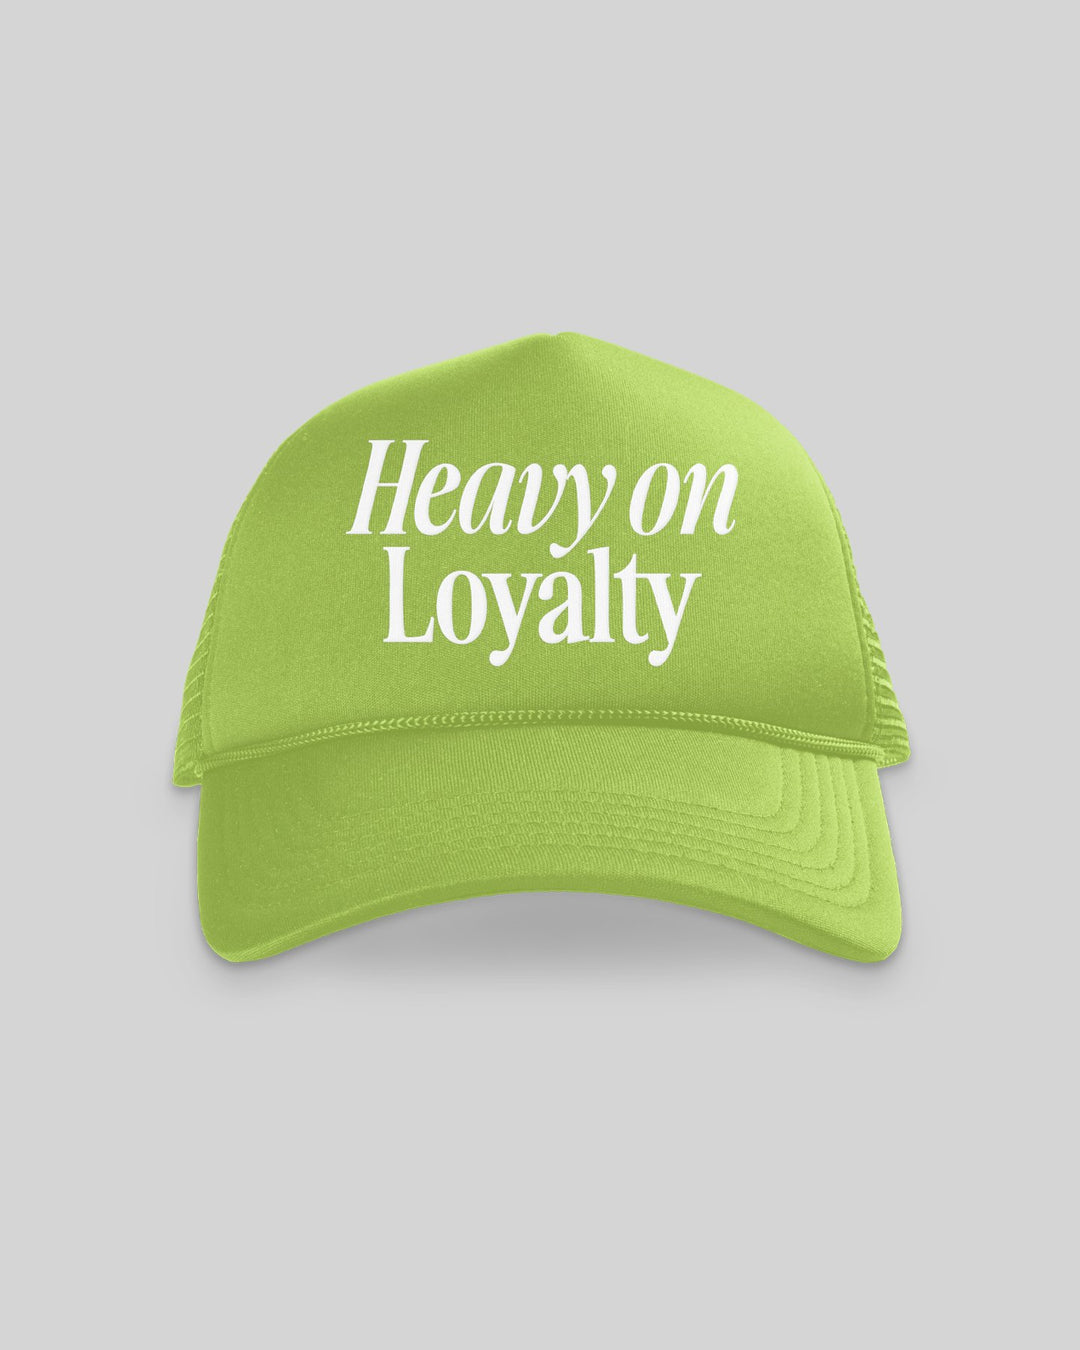 Heavy On Loyalty Neon Green 5 Panel Trucker Hat - trainofthoughtcollective